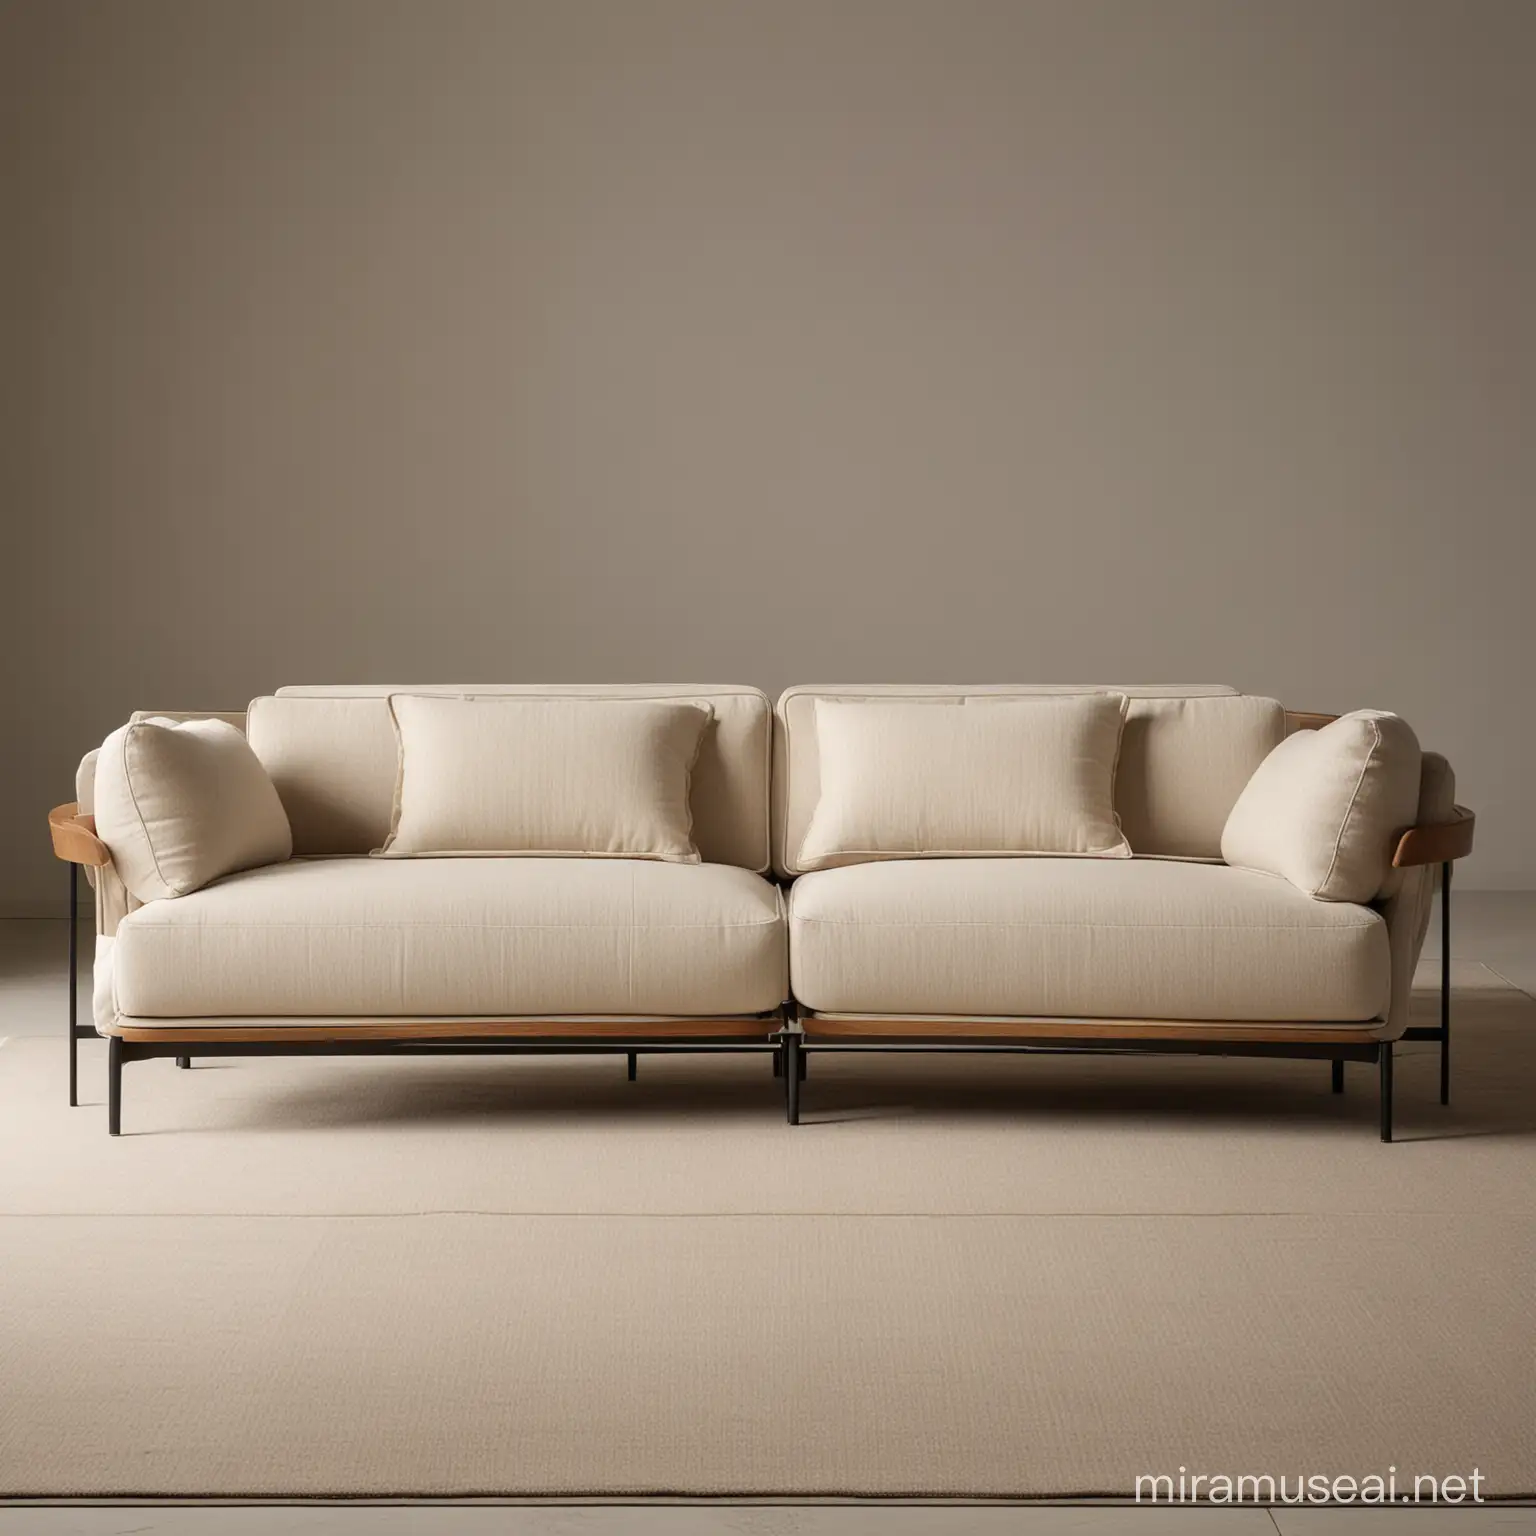 Modern Geometric Puzzle Sofa Set in Terry Linen Fabric Home Interior Design